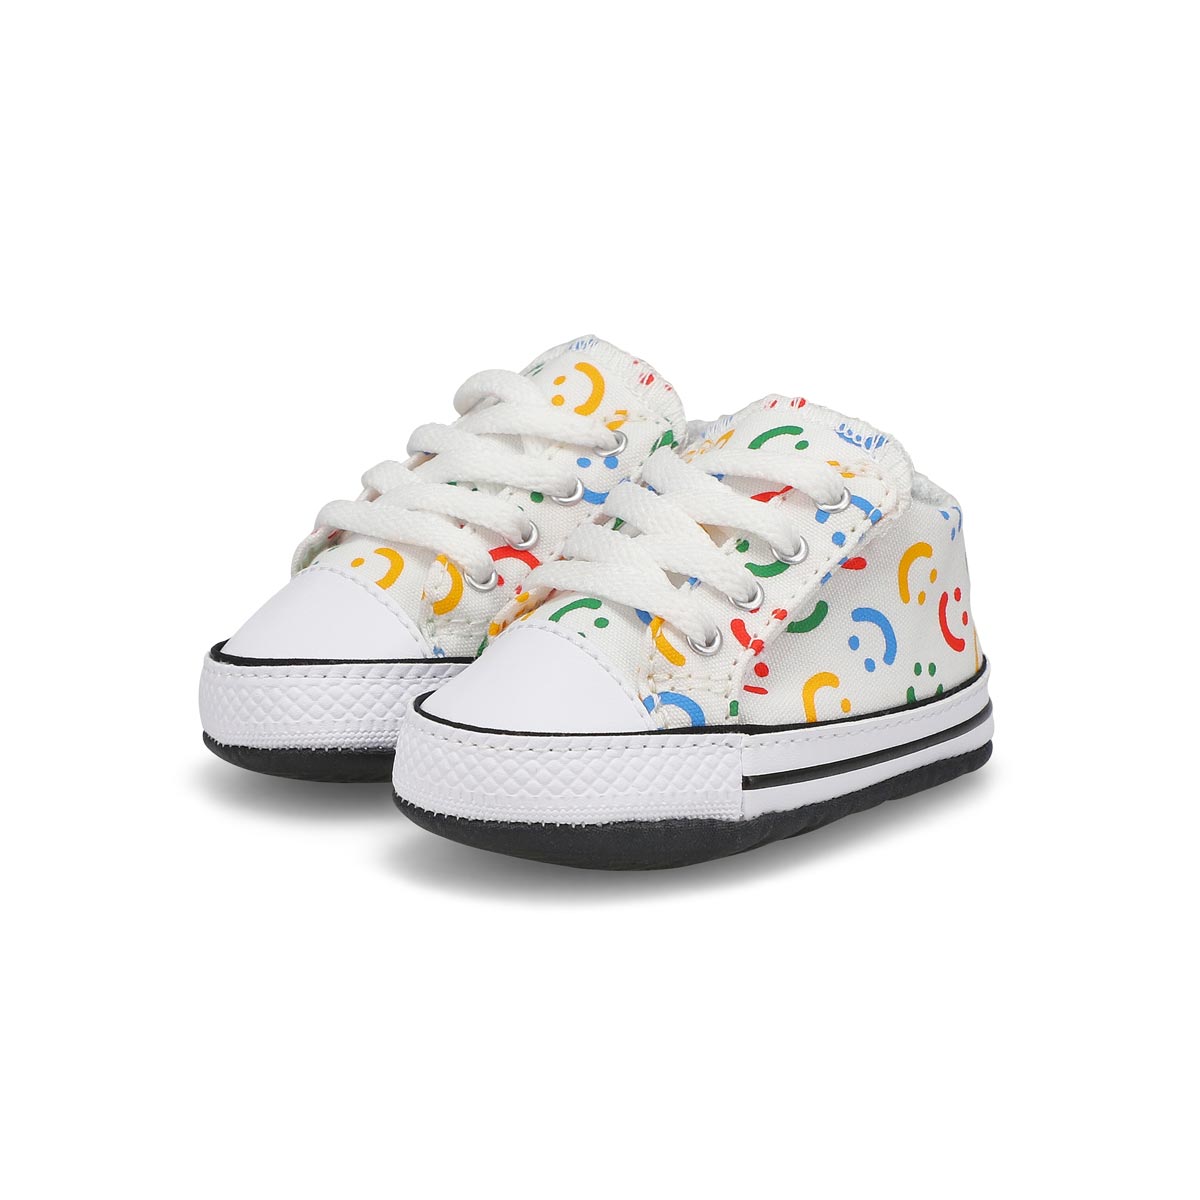 Infants' Chuck Taylor All Star Cribster Polka Doodle Sneaker - White/Fever Dream/White